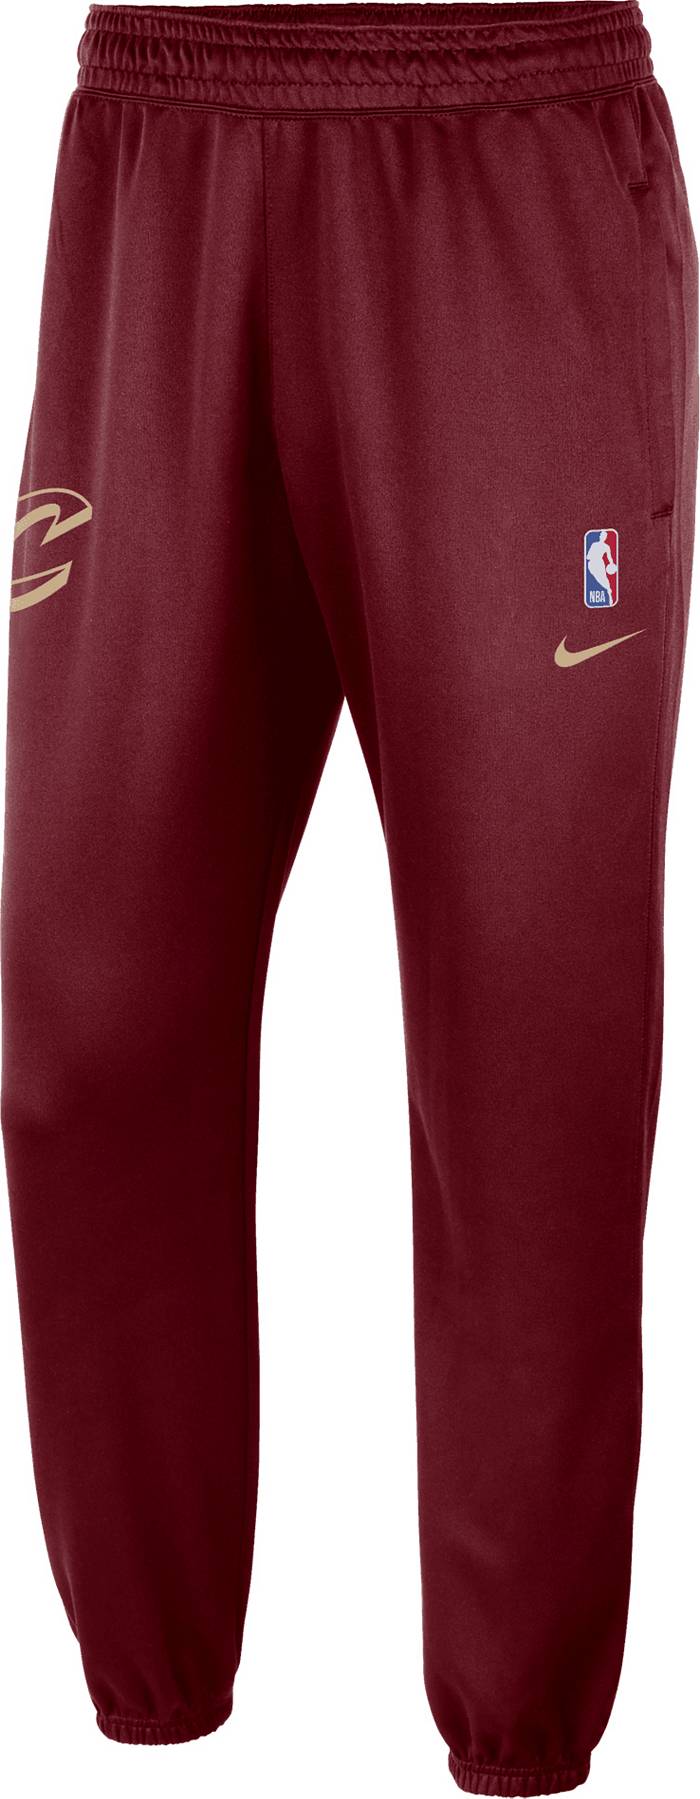 Nike Men's Cleveland Cavaliers Red Spotlight Pants, Large